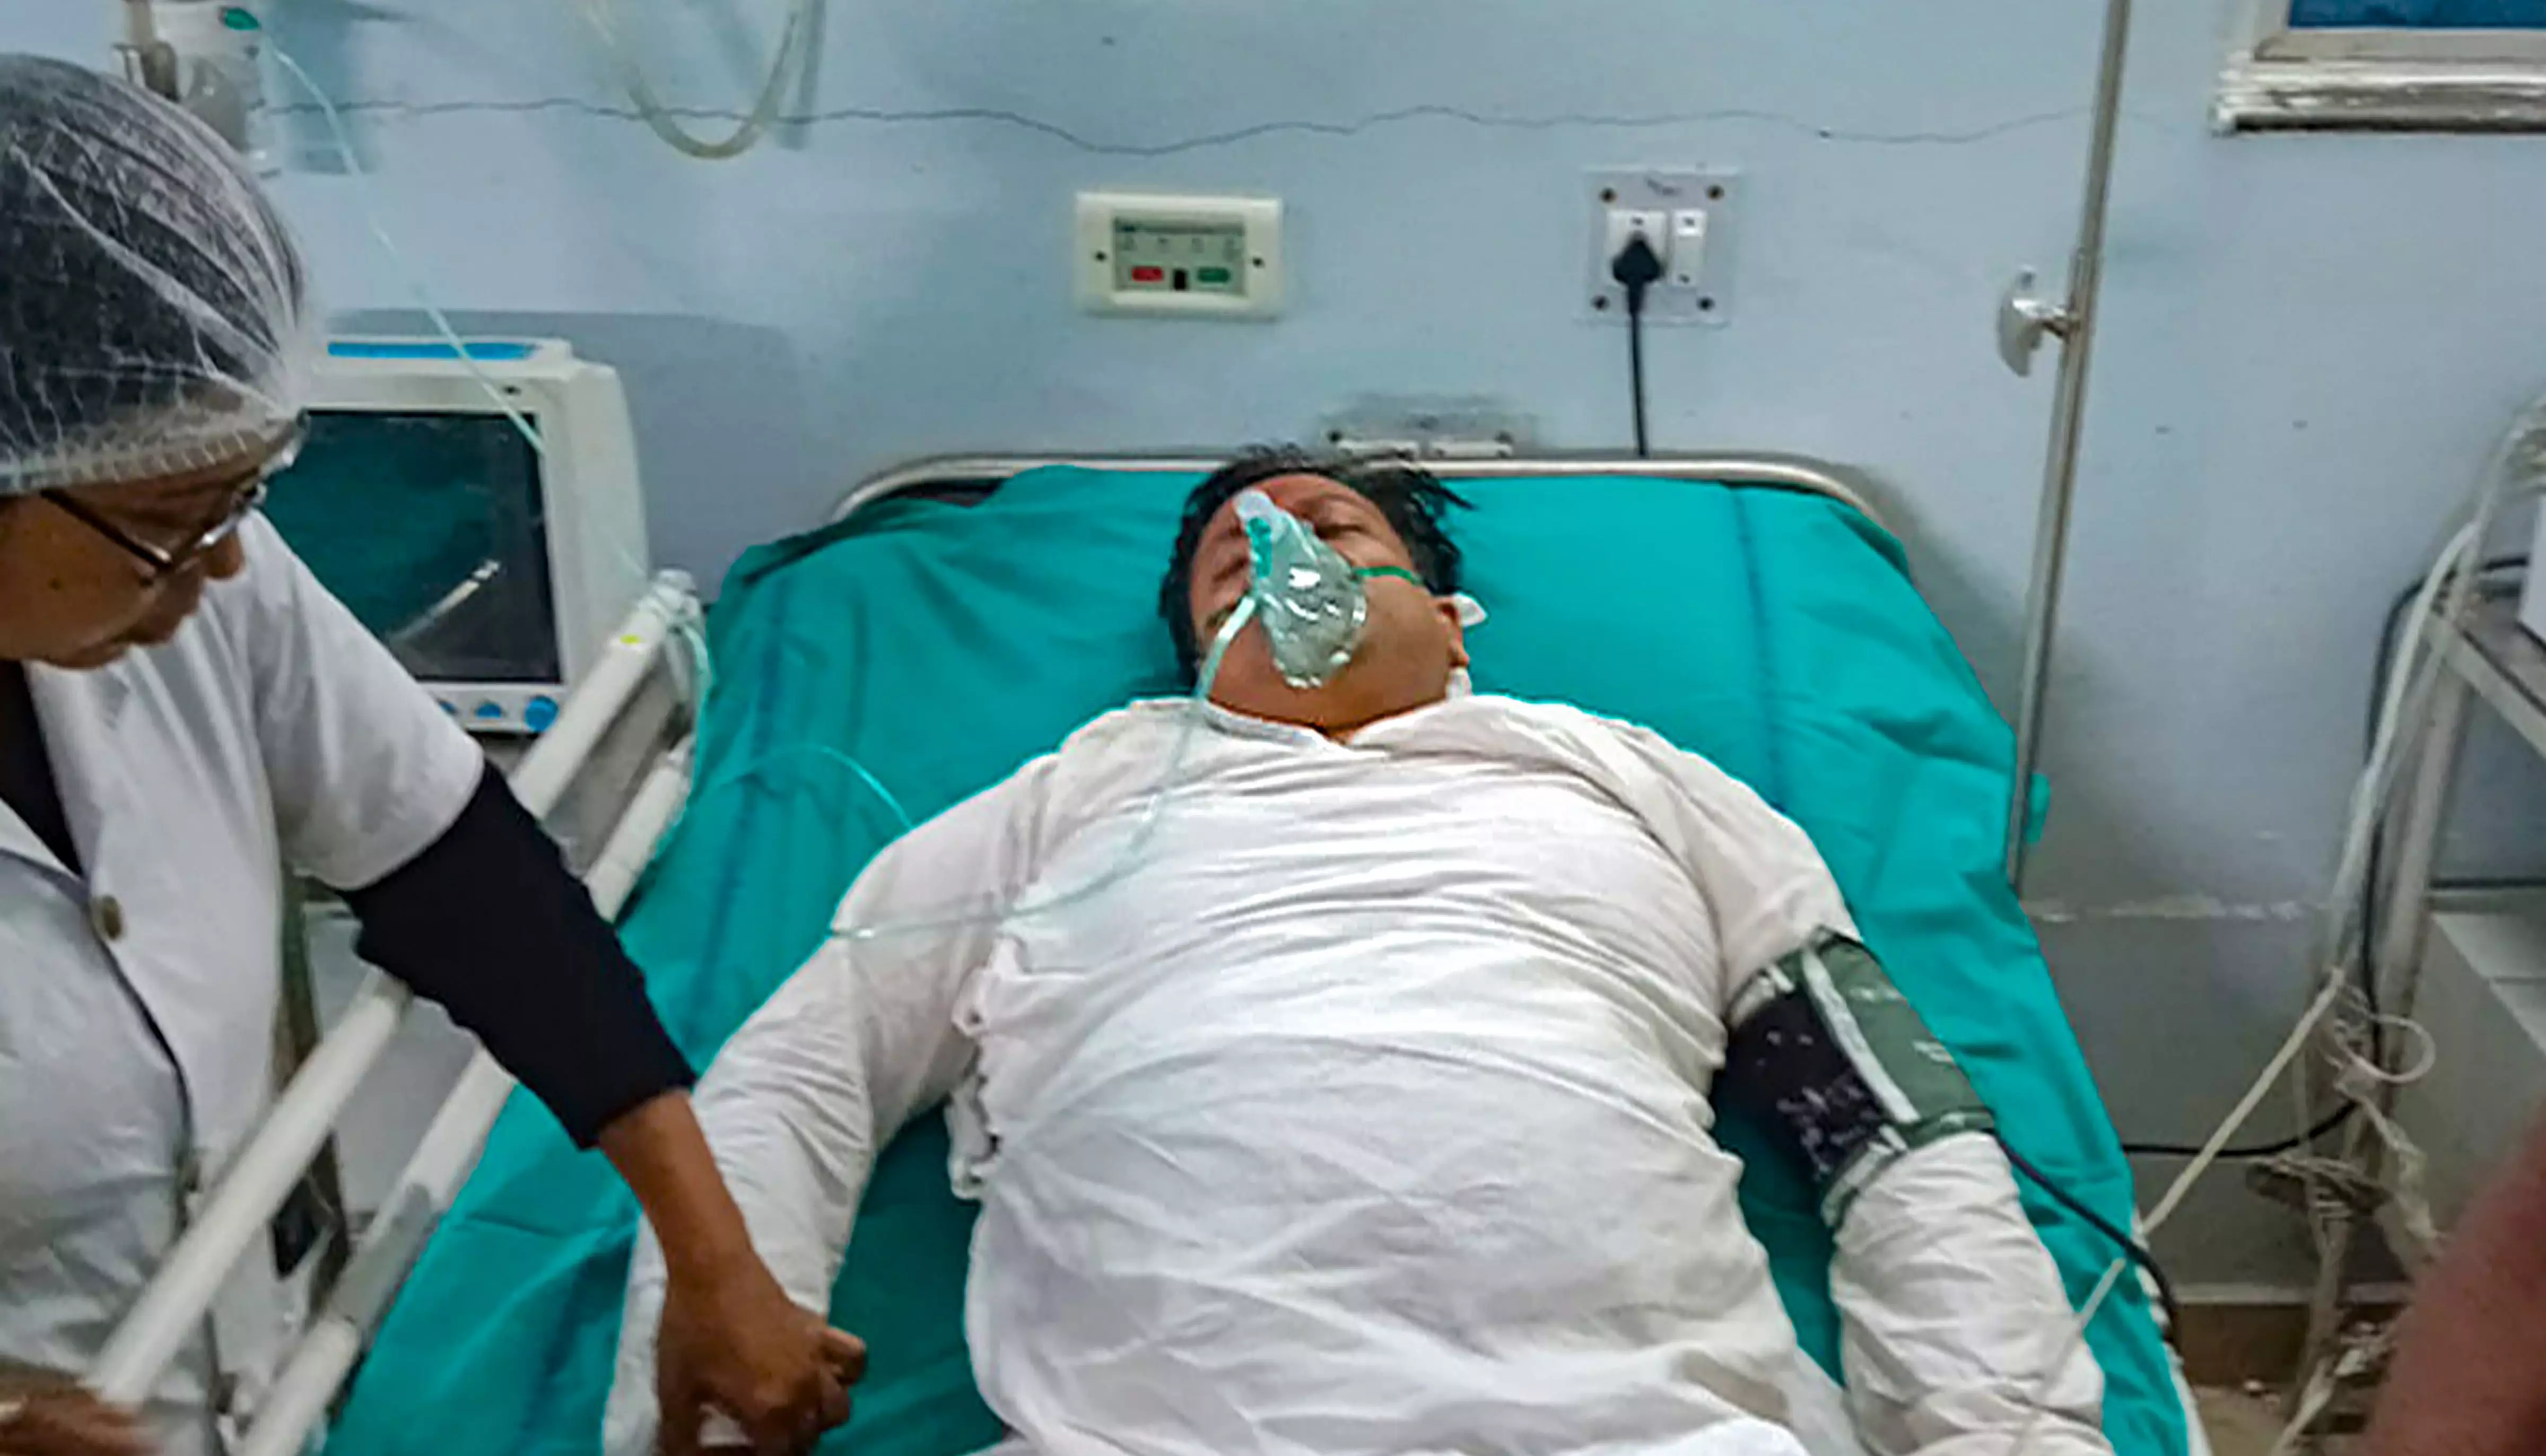 Bengal BJP Chief Sukanta Majumdar Hurt in Fight With Cops, Hospitalized